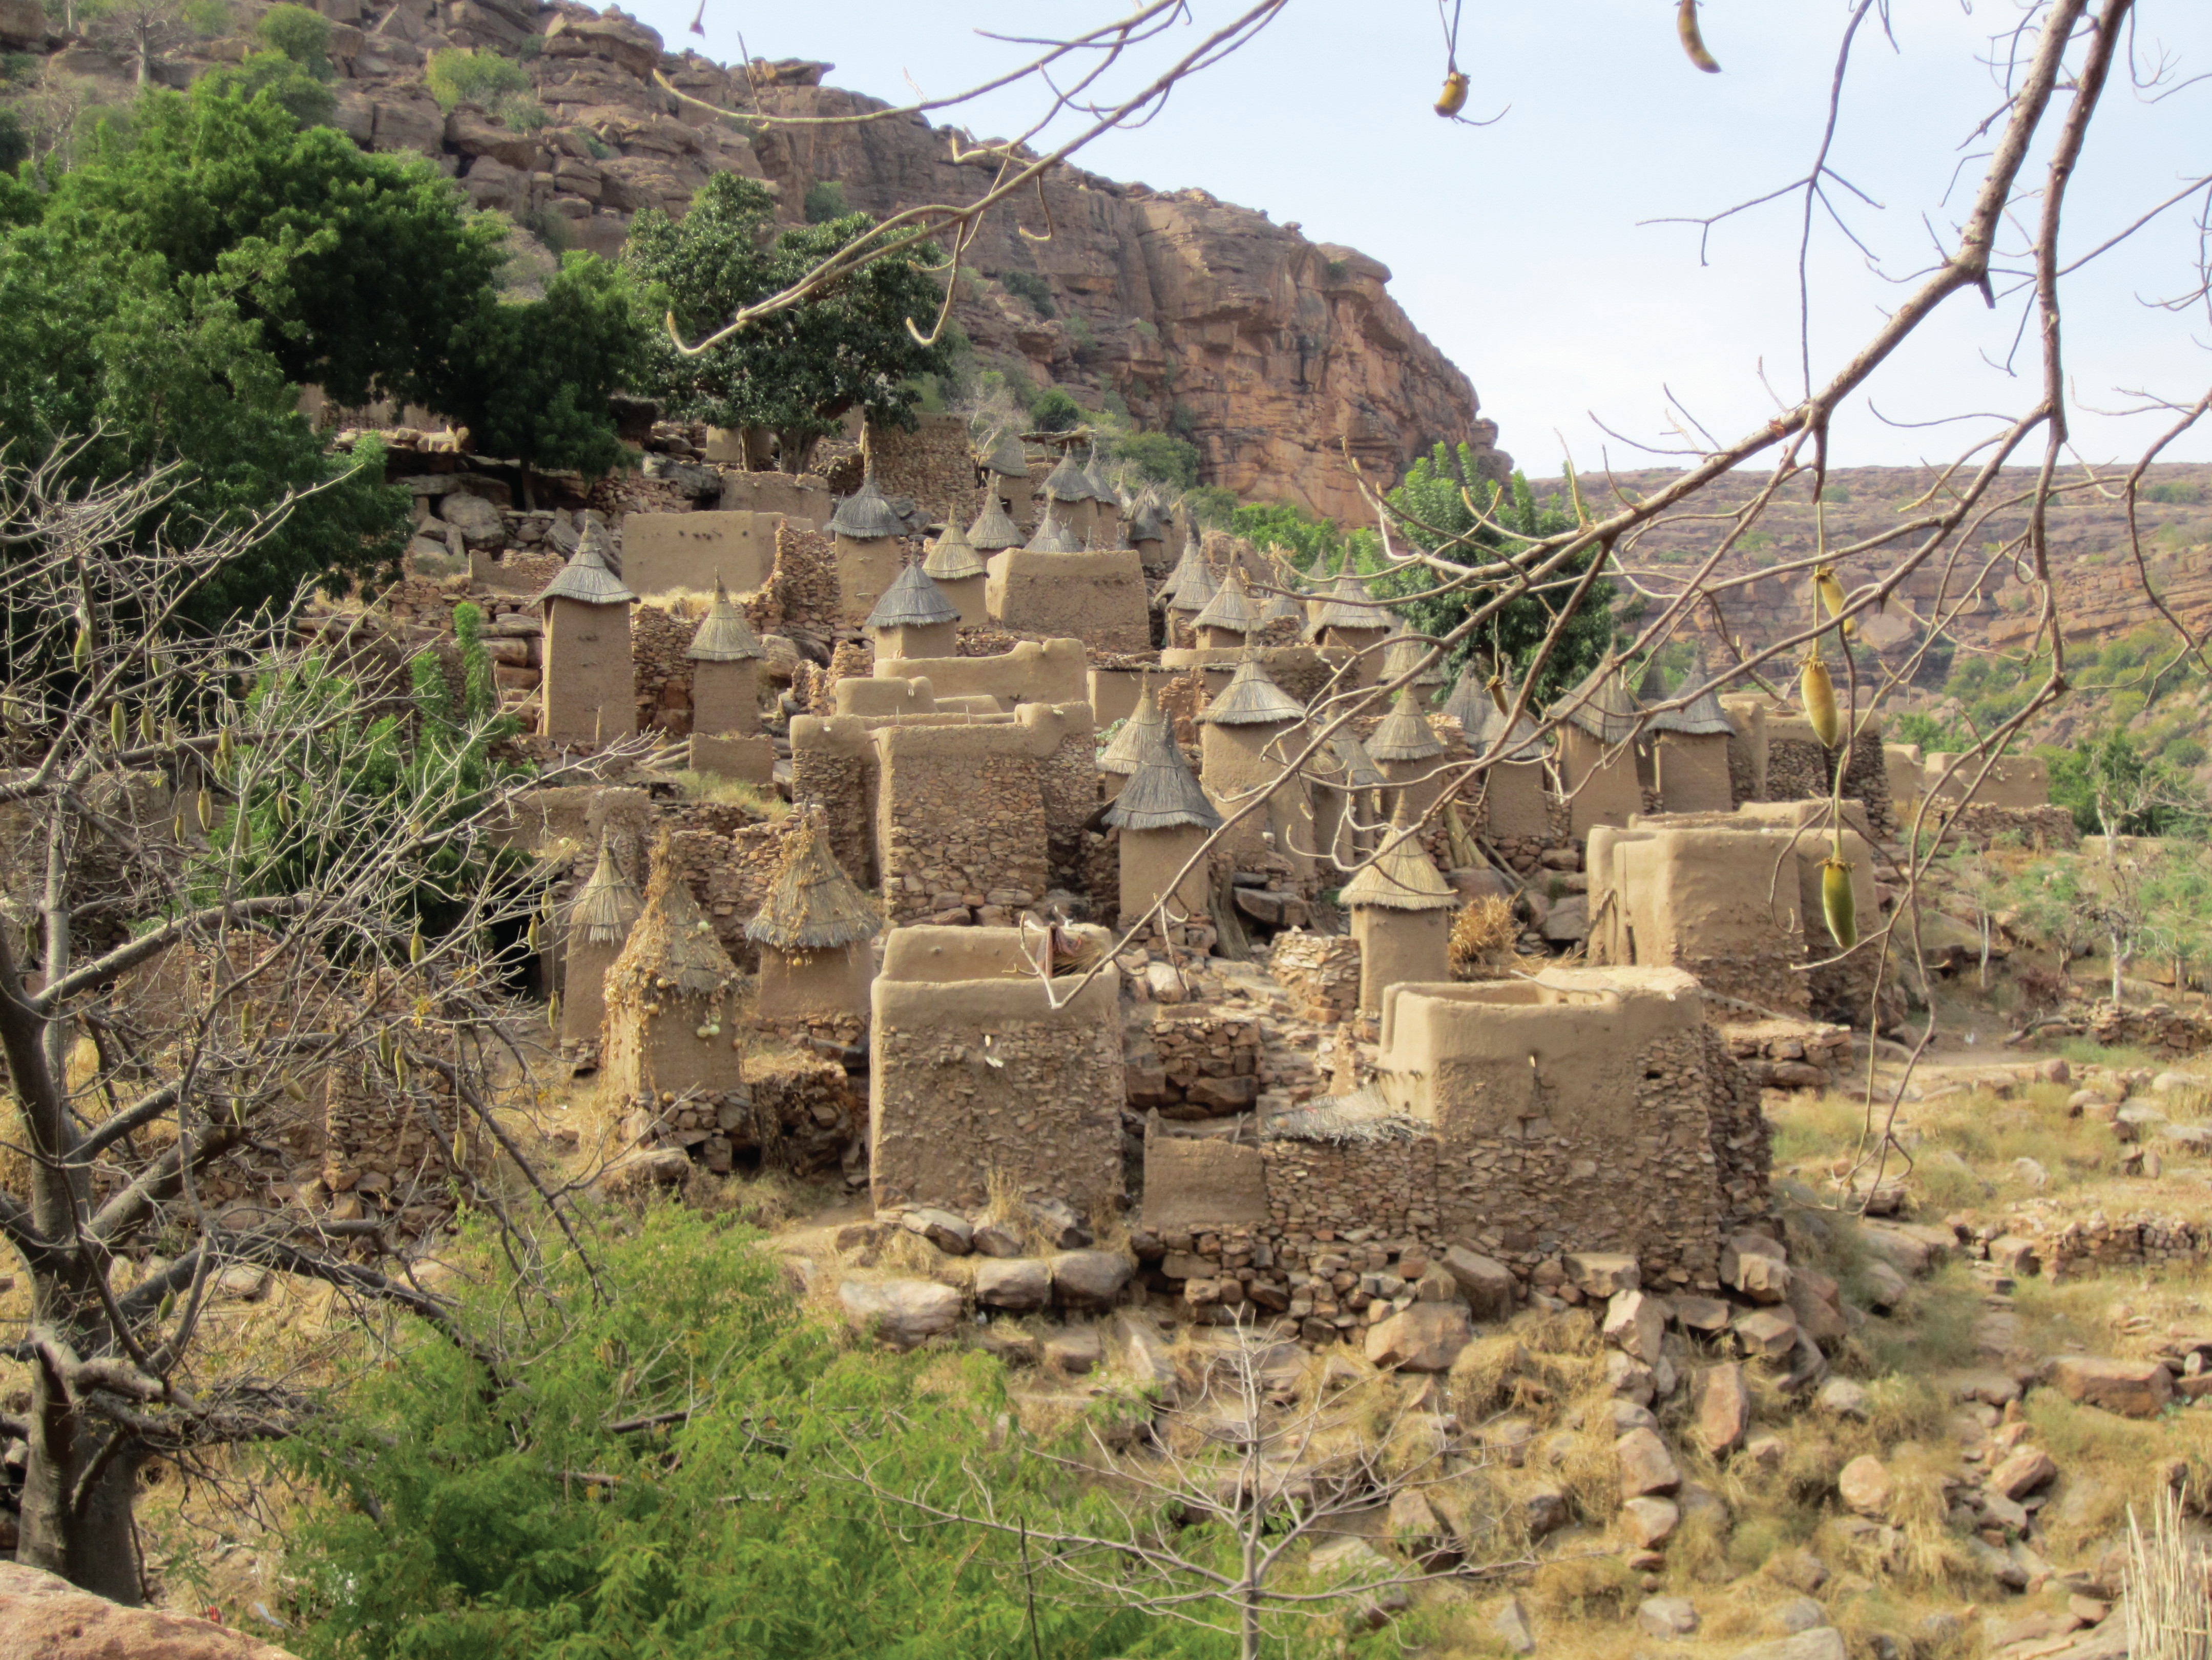 Village in Mali where researchers work